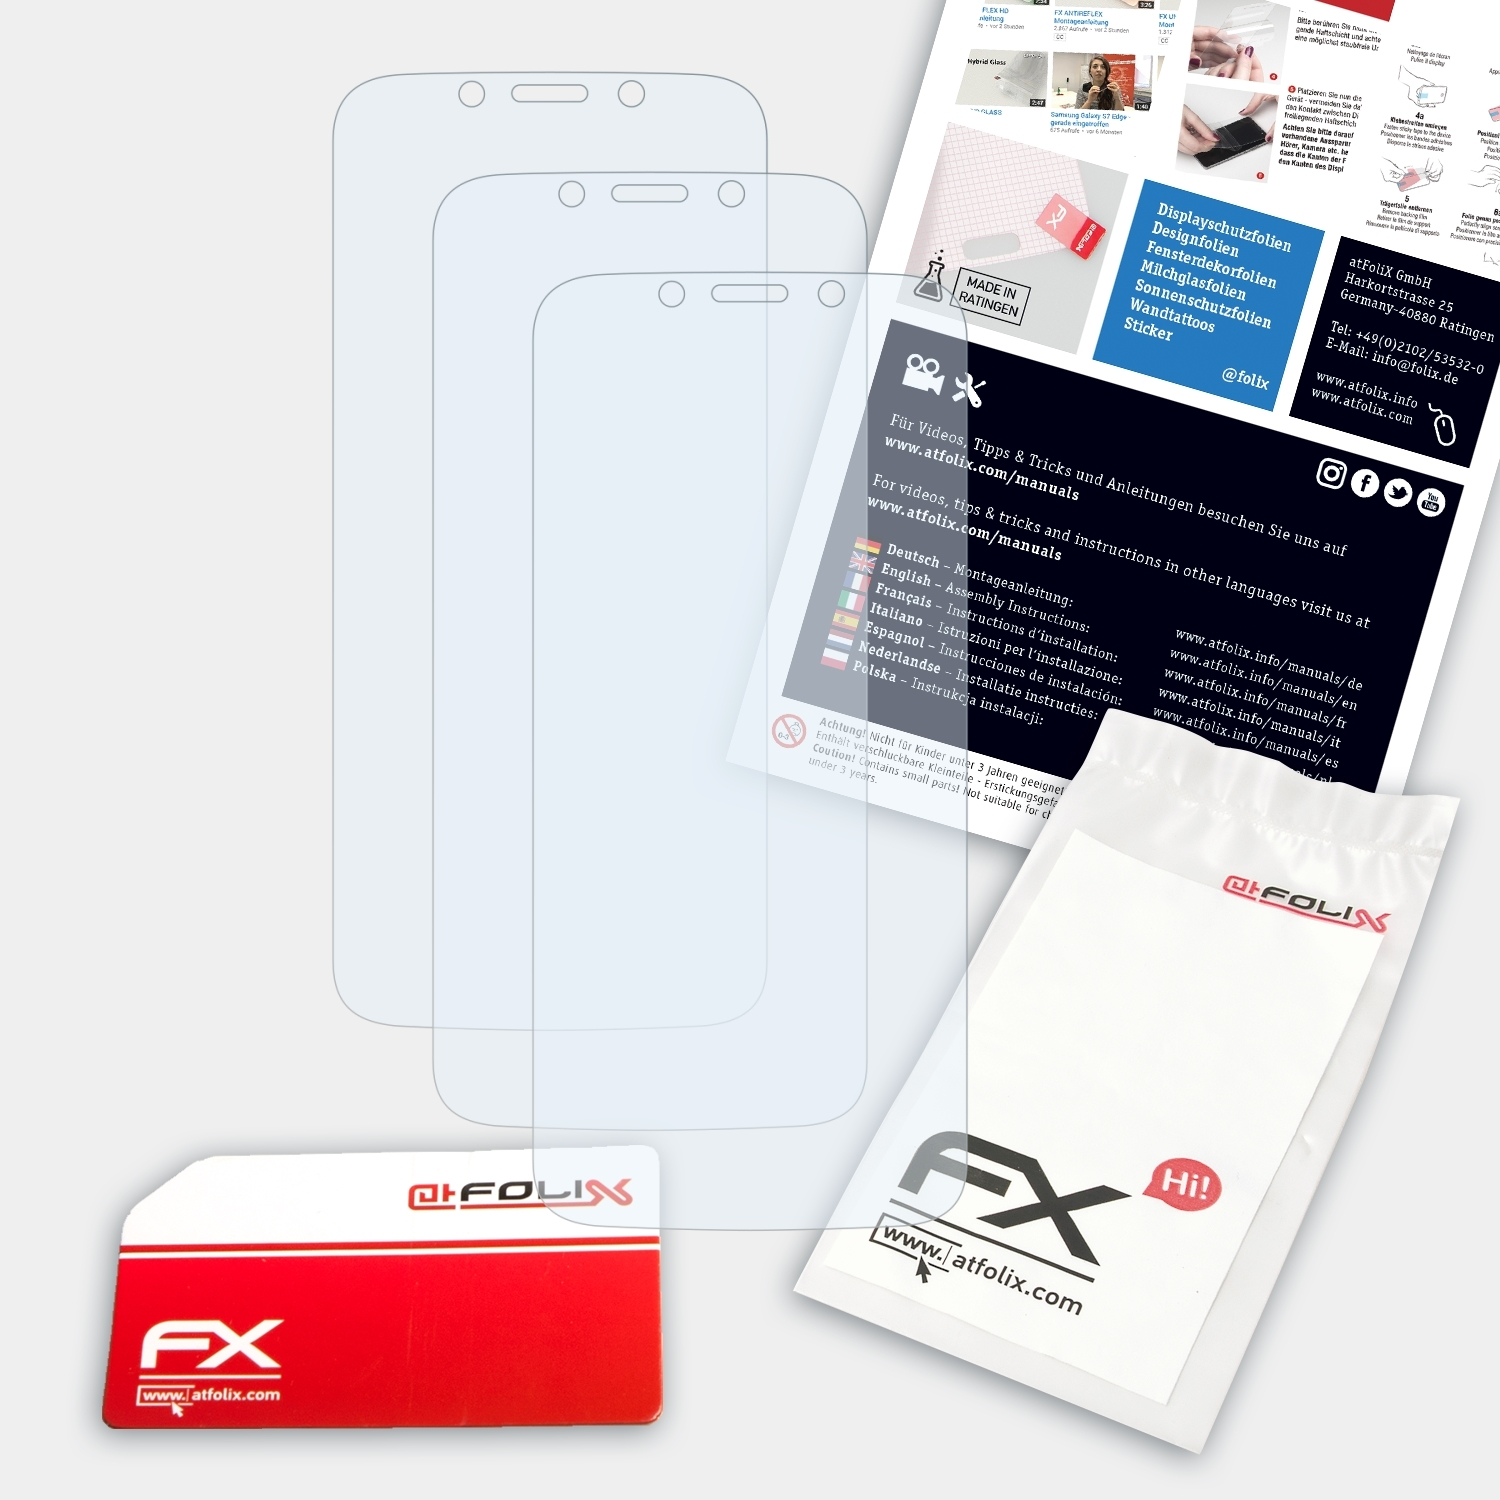 ATFOLIX 3x FX-Clear Displayschutz(für Play) Moto Lenovo G7 Motorola